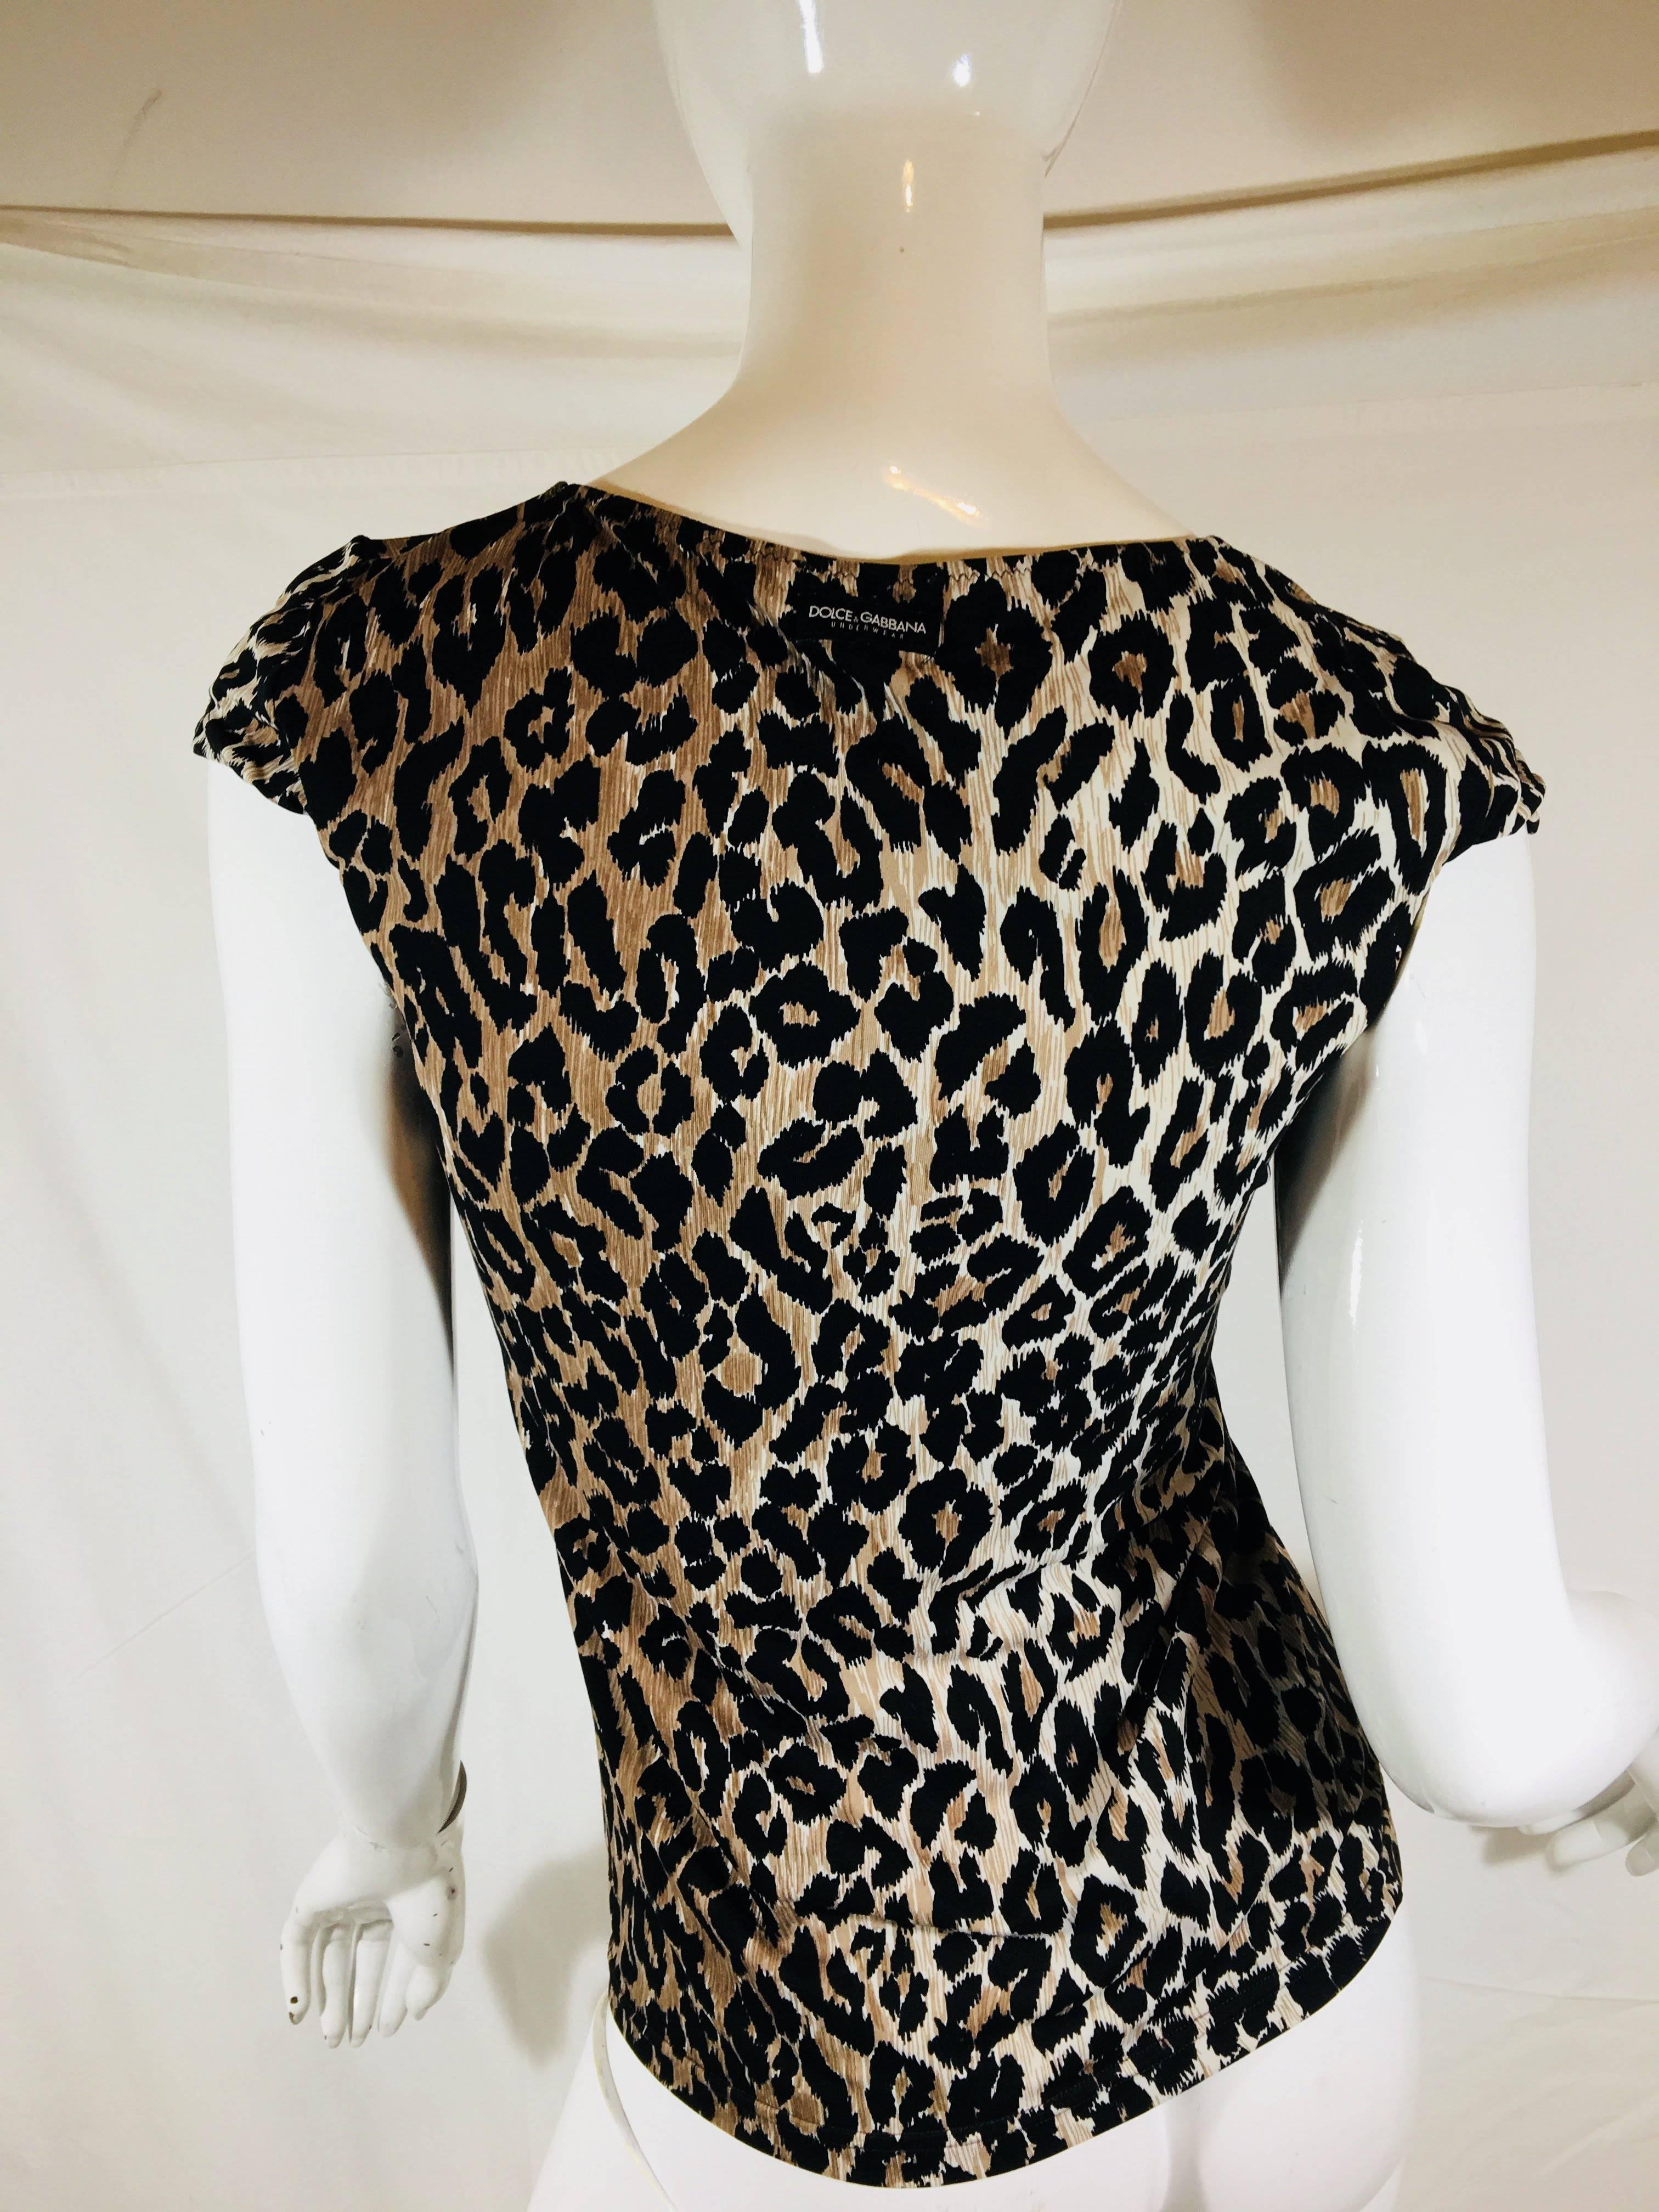 Women's or Men's Dolce & Gabbana Cheetah Print Top